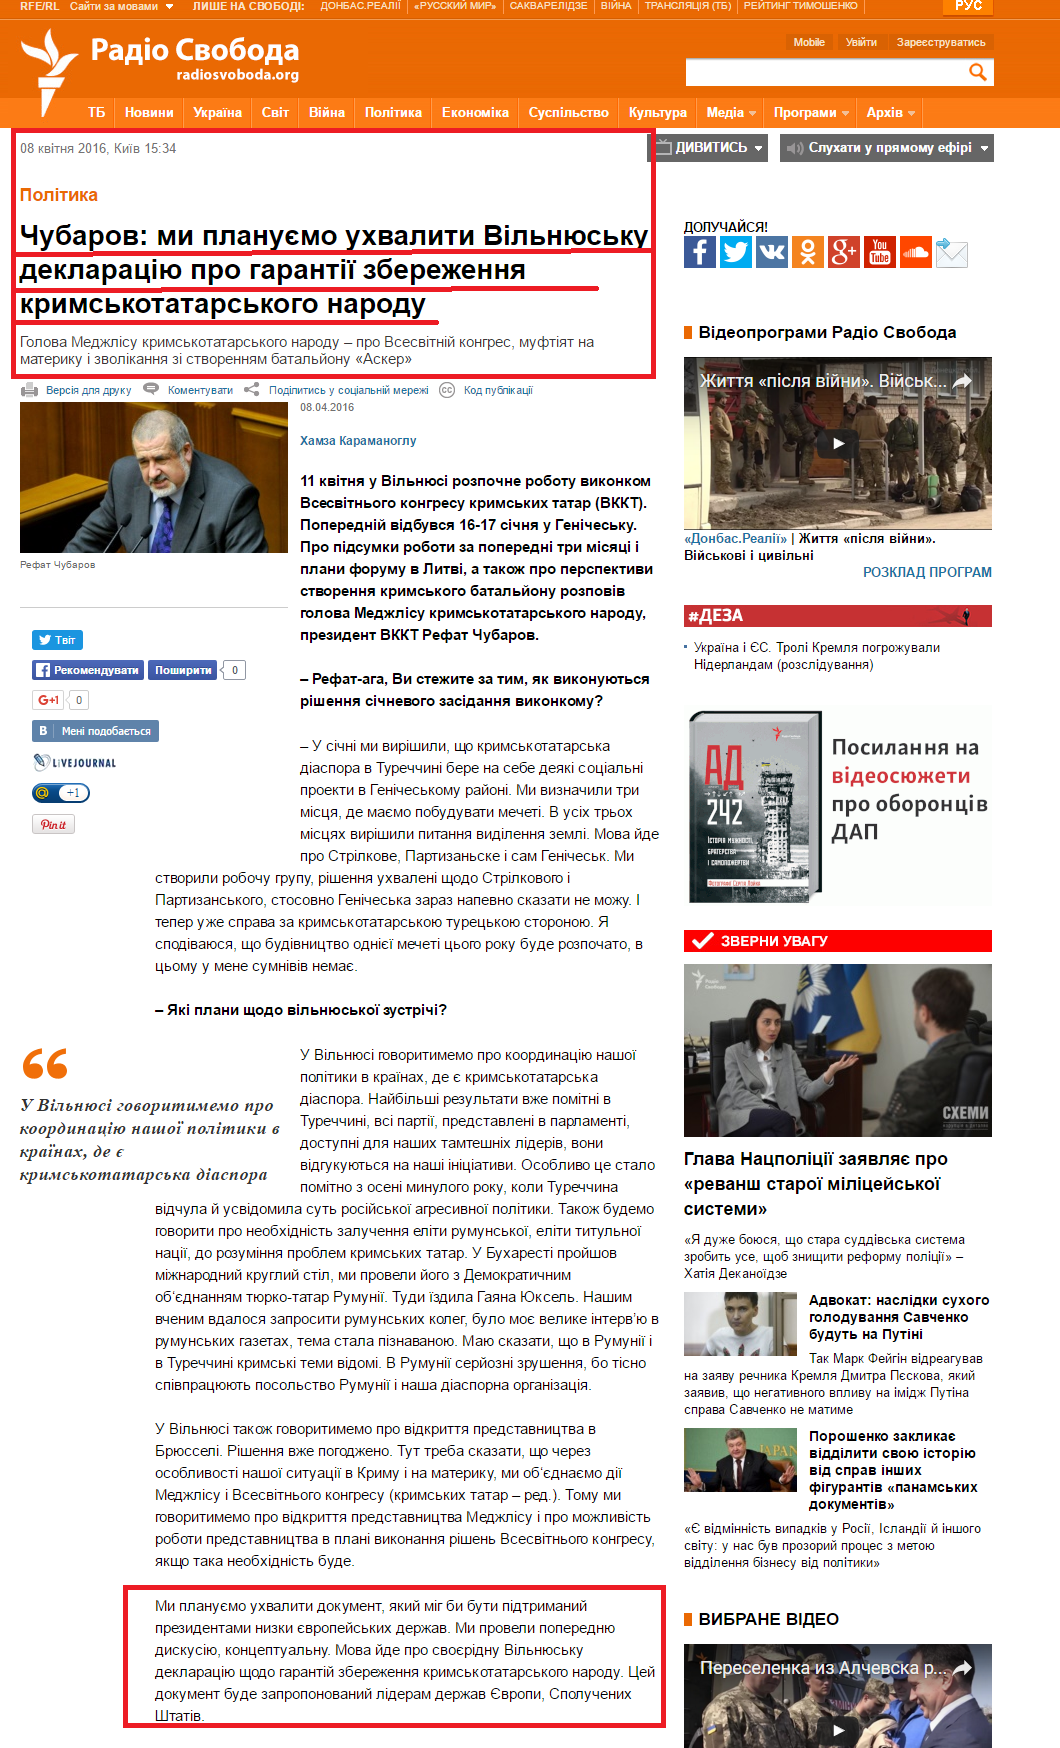 http://www.radiosvoboda.org/content/article/27662448.html